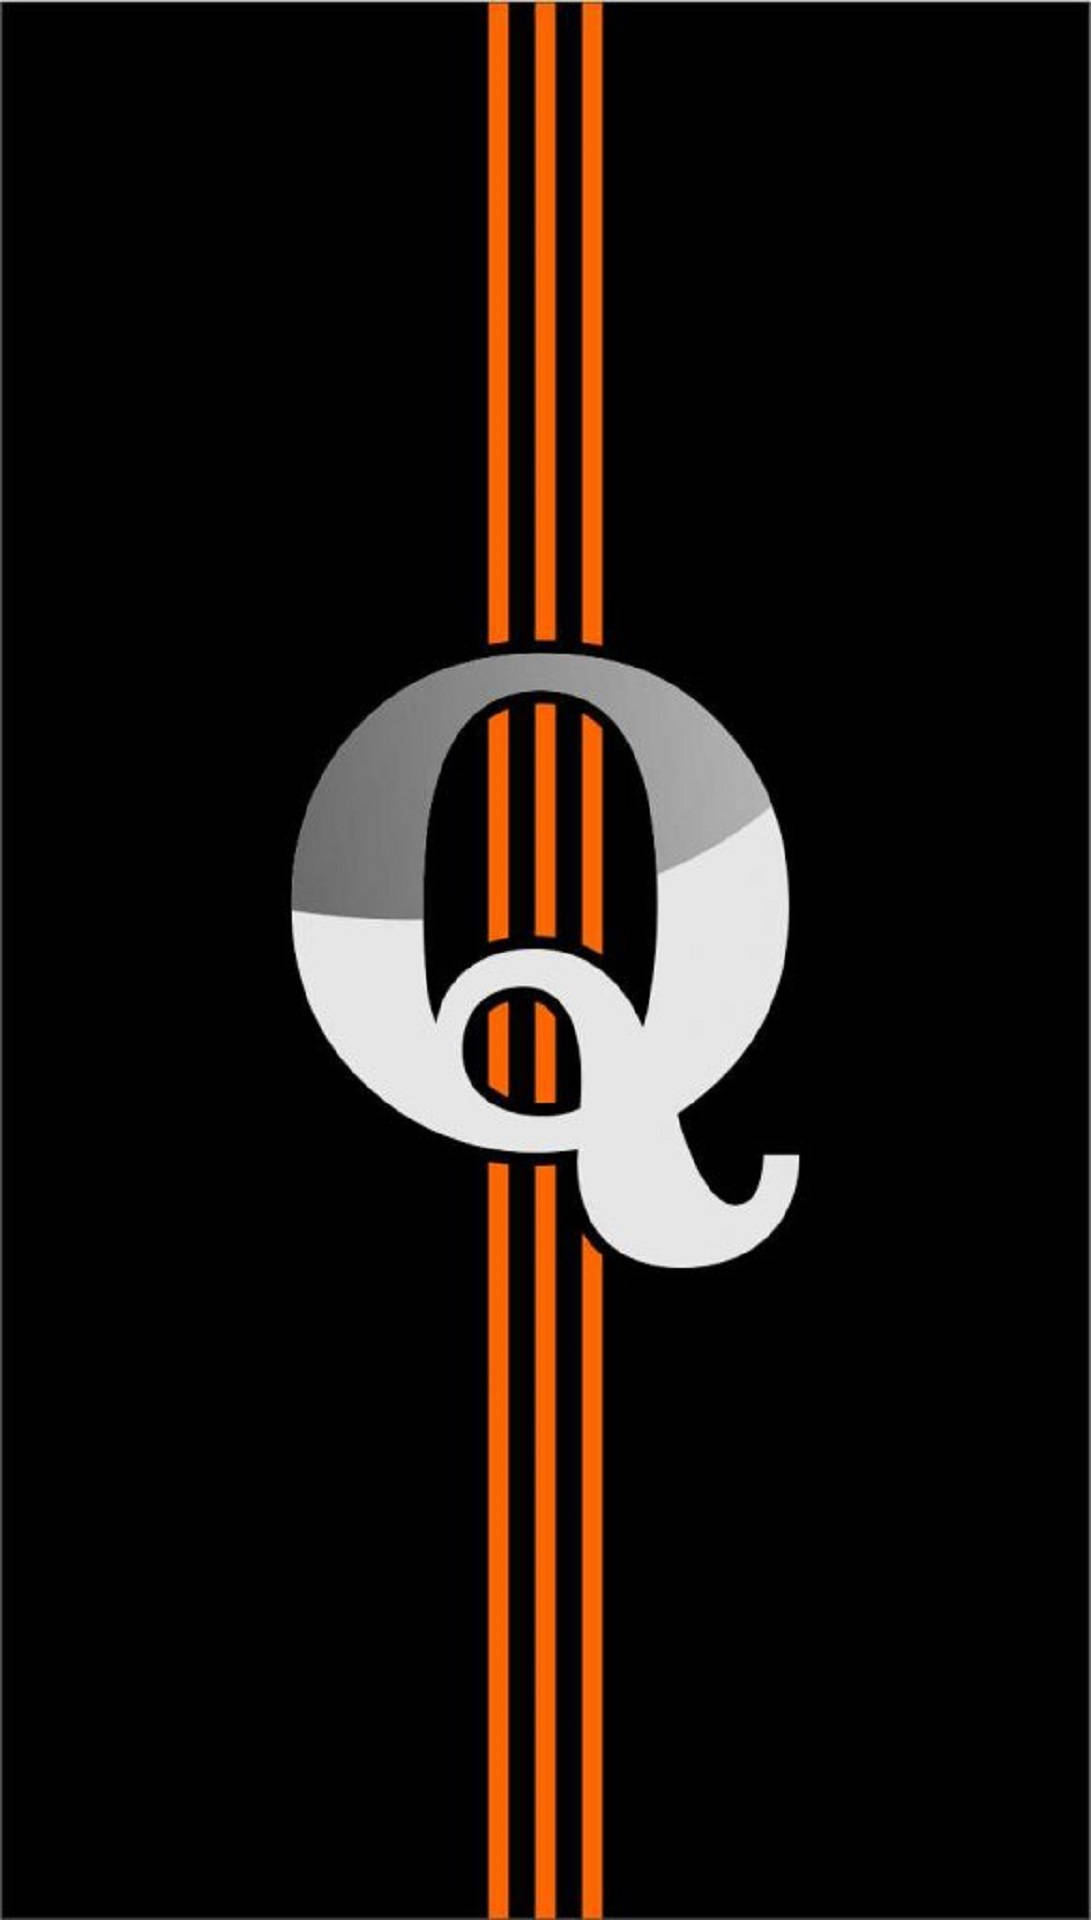 Letter Q With Orange Lines